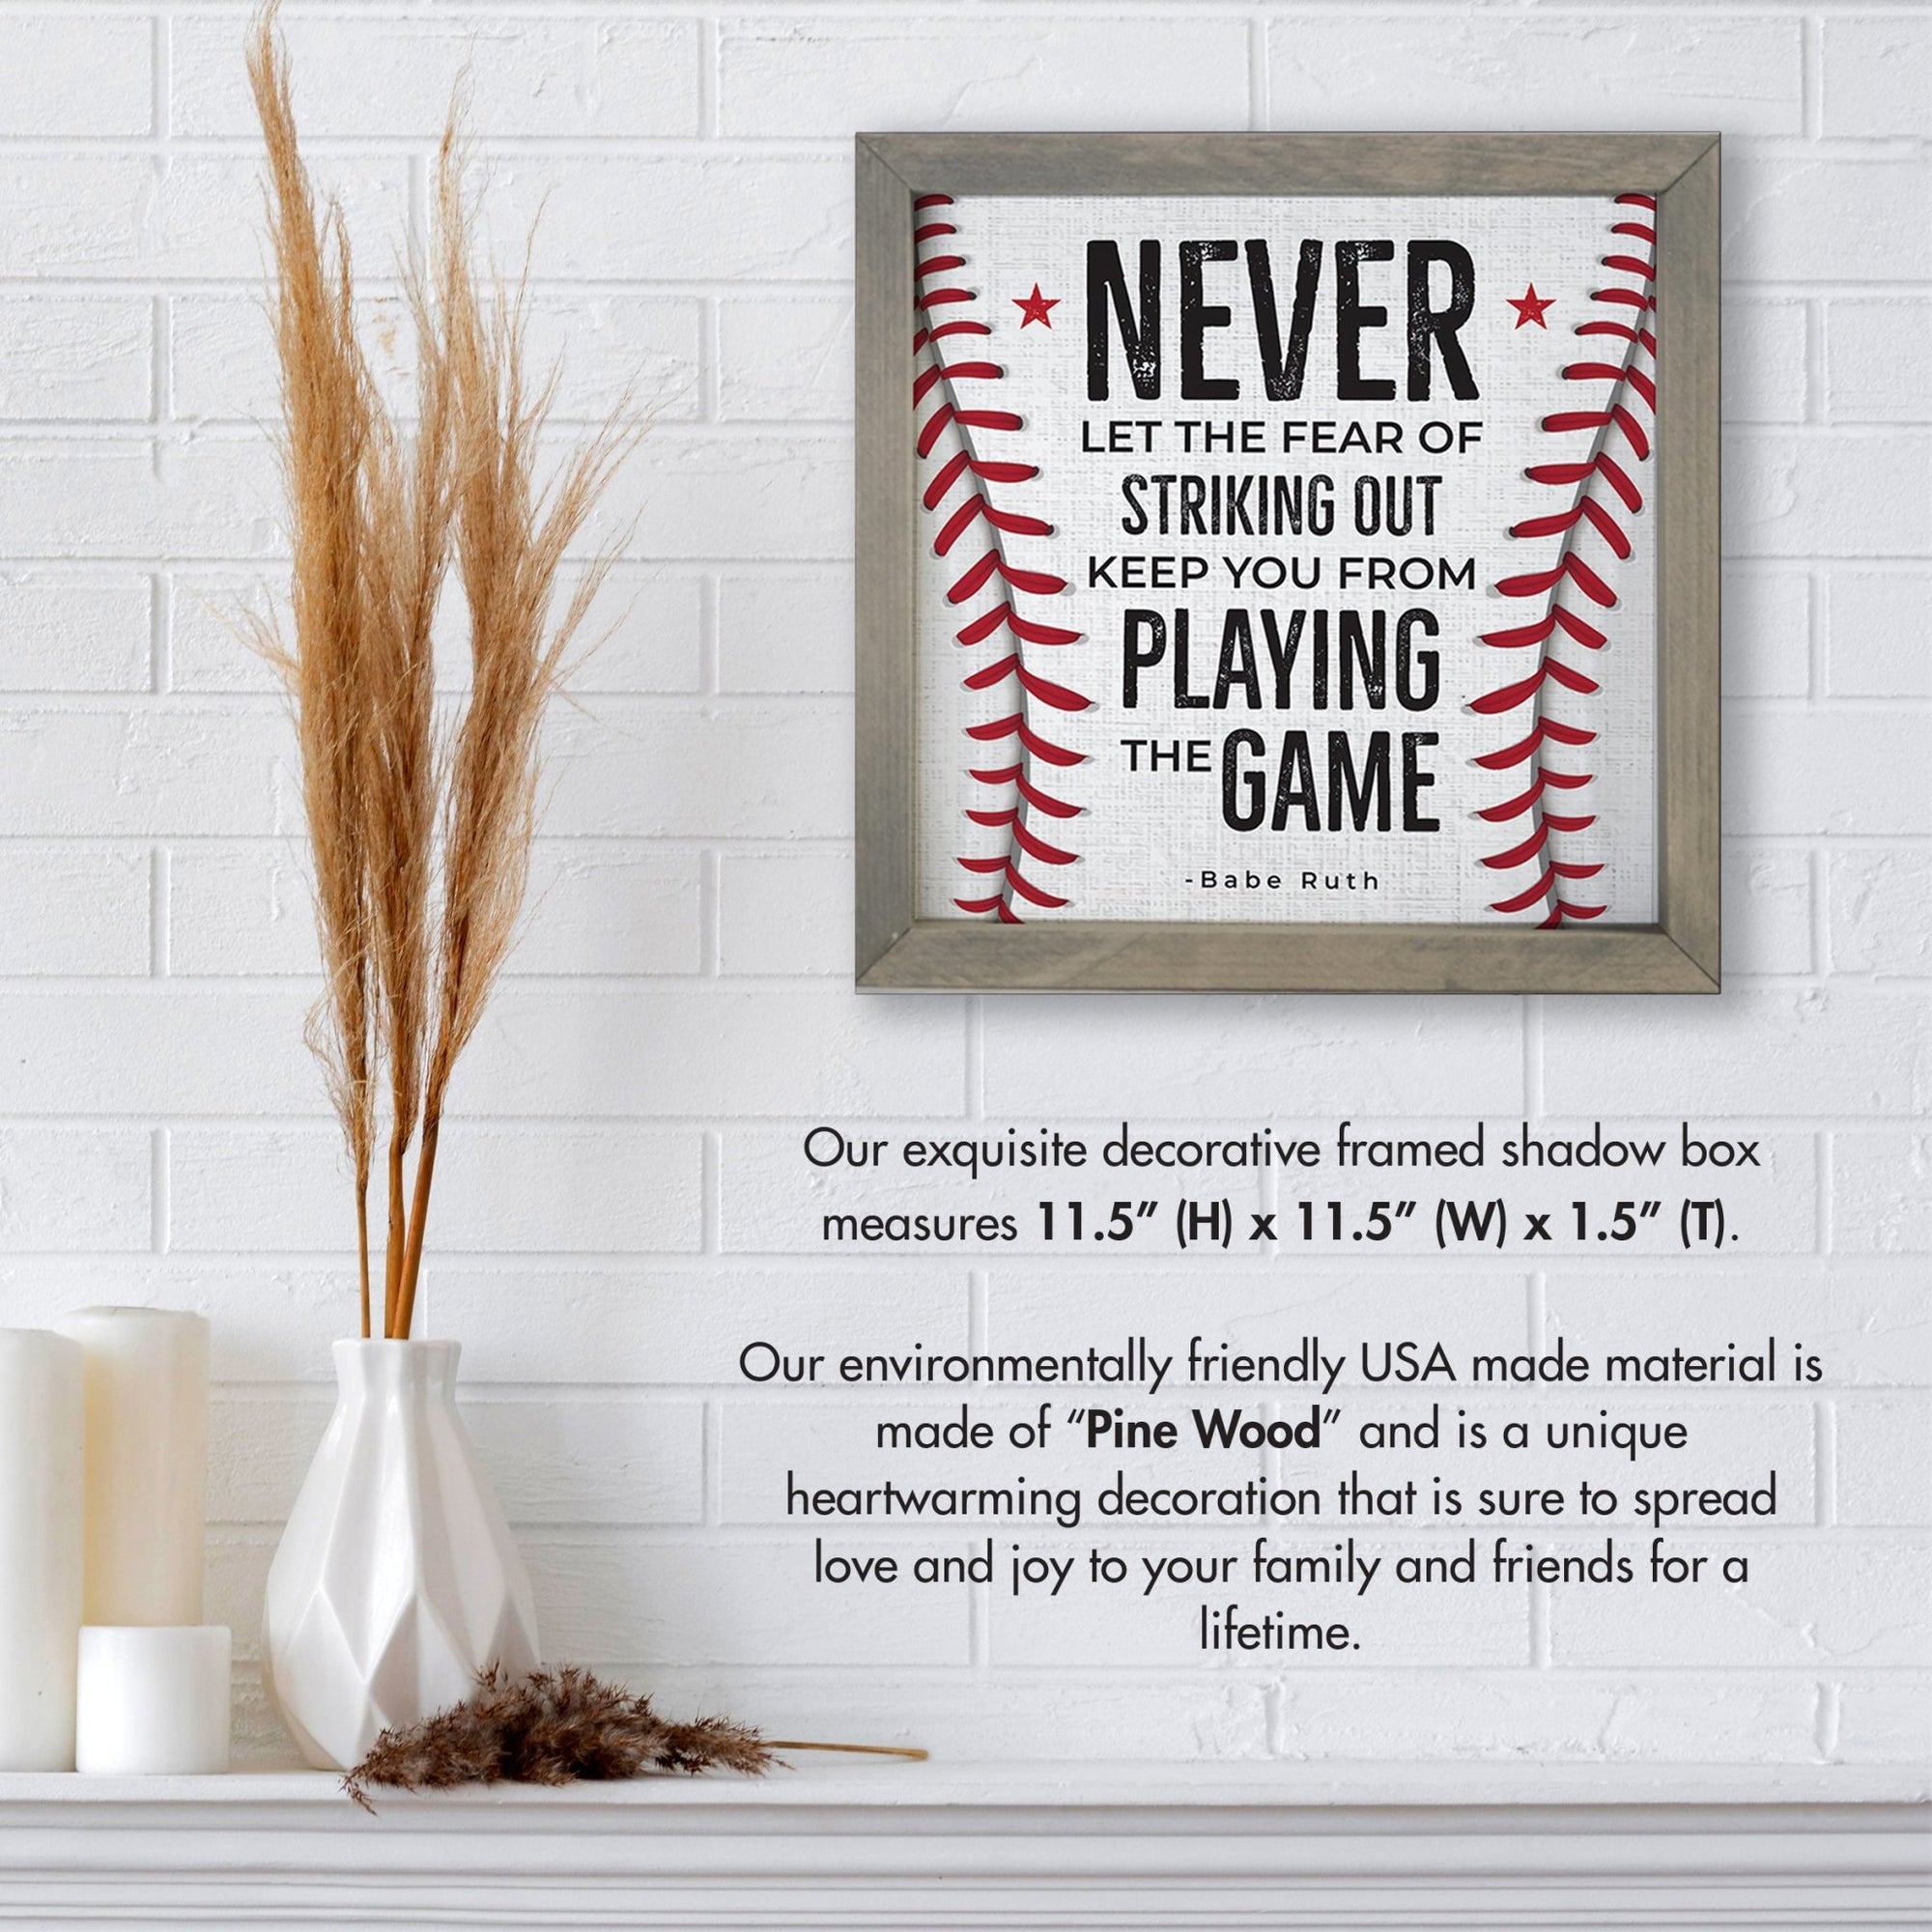 Elegant Baseball Framed Shadow Box Shelf Décor With Inspiring Bible Verses - Never Let The Fear - LifeSong Milestones